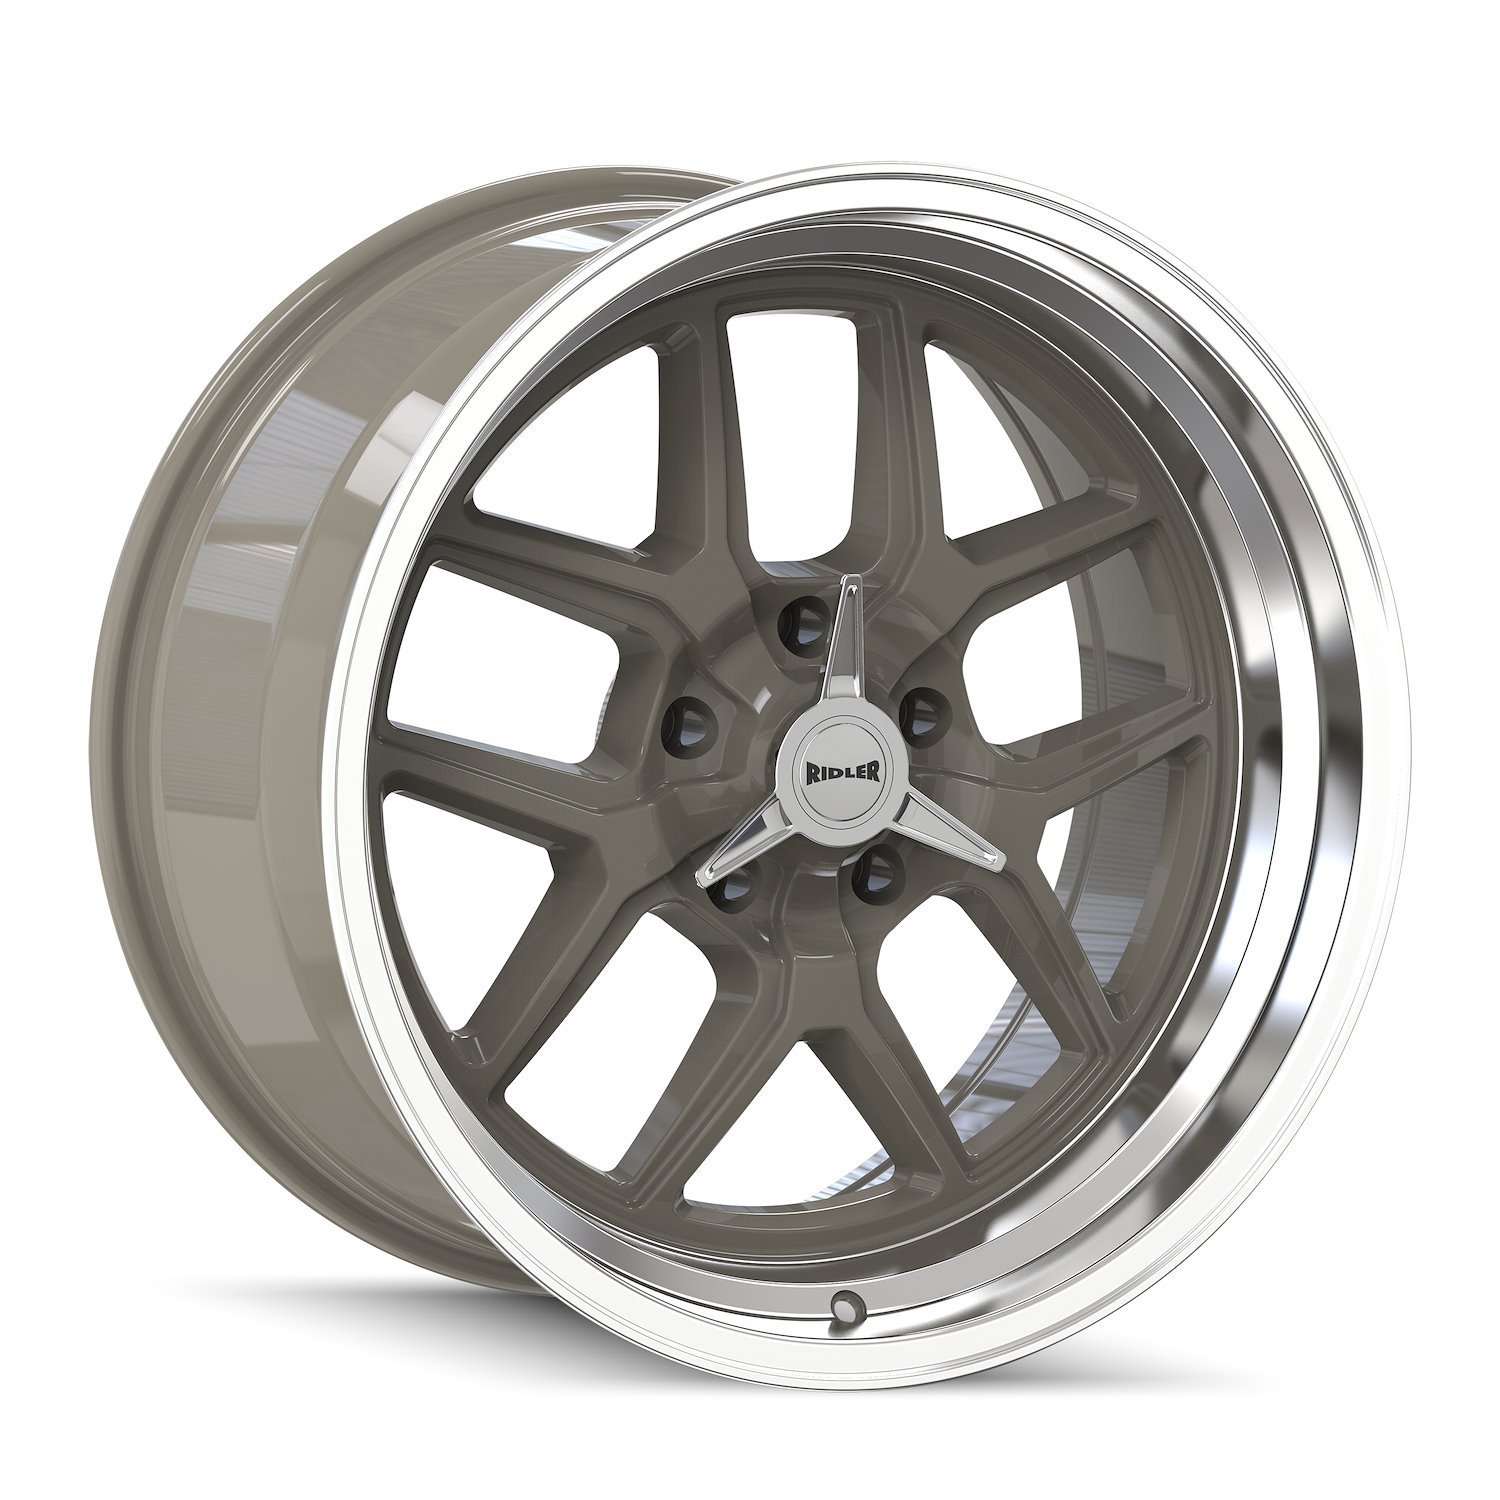 610-2873G 610-Series Wheel [Size: 20" x 8.50"] Gloss Grey Polished Finish